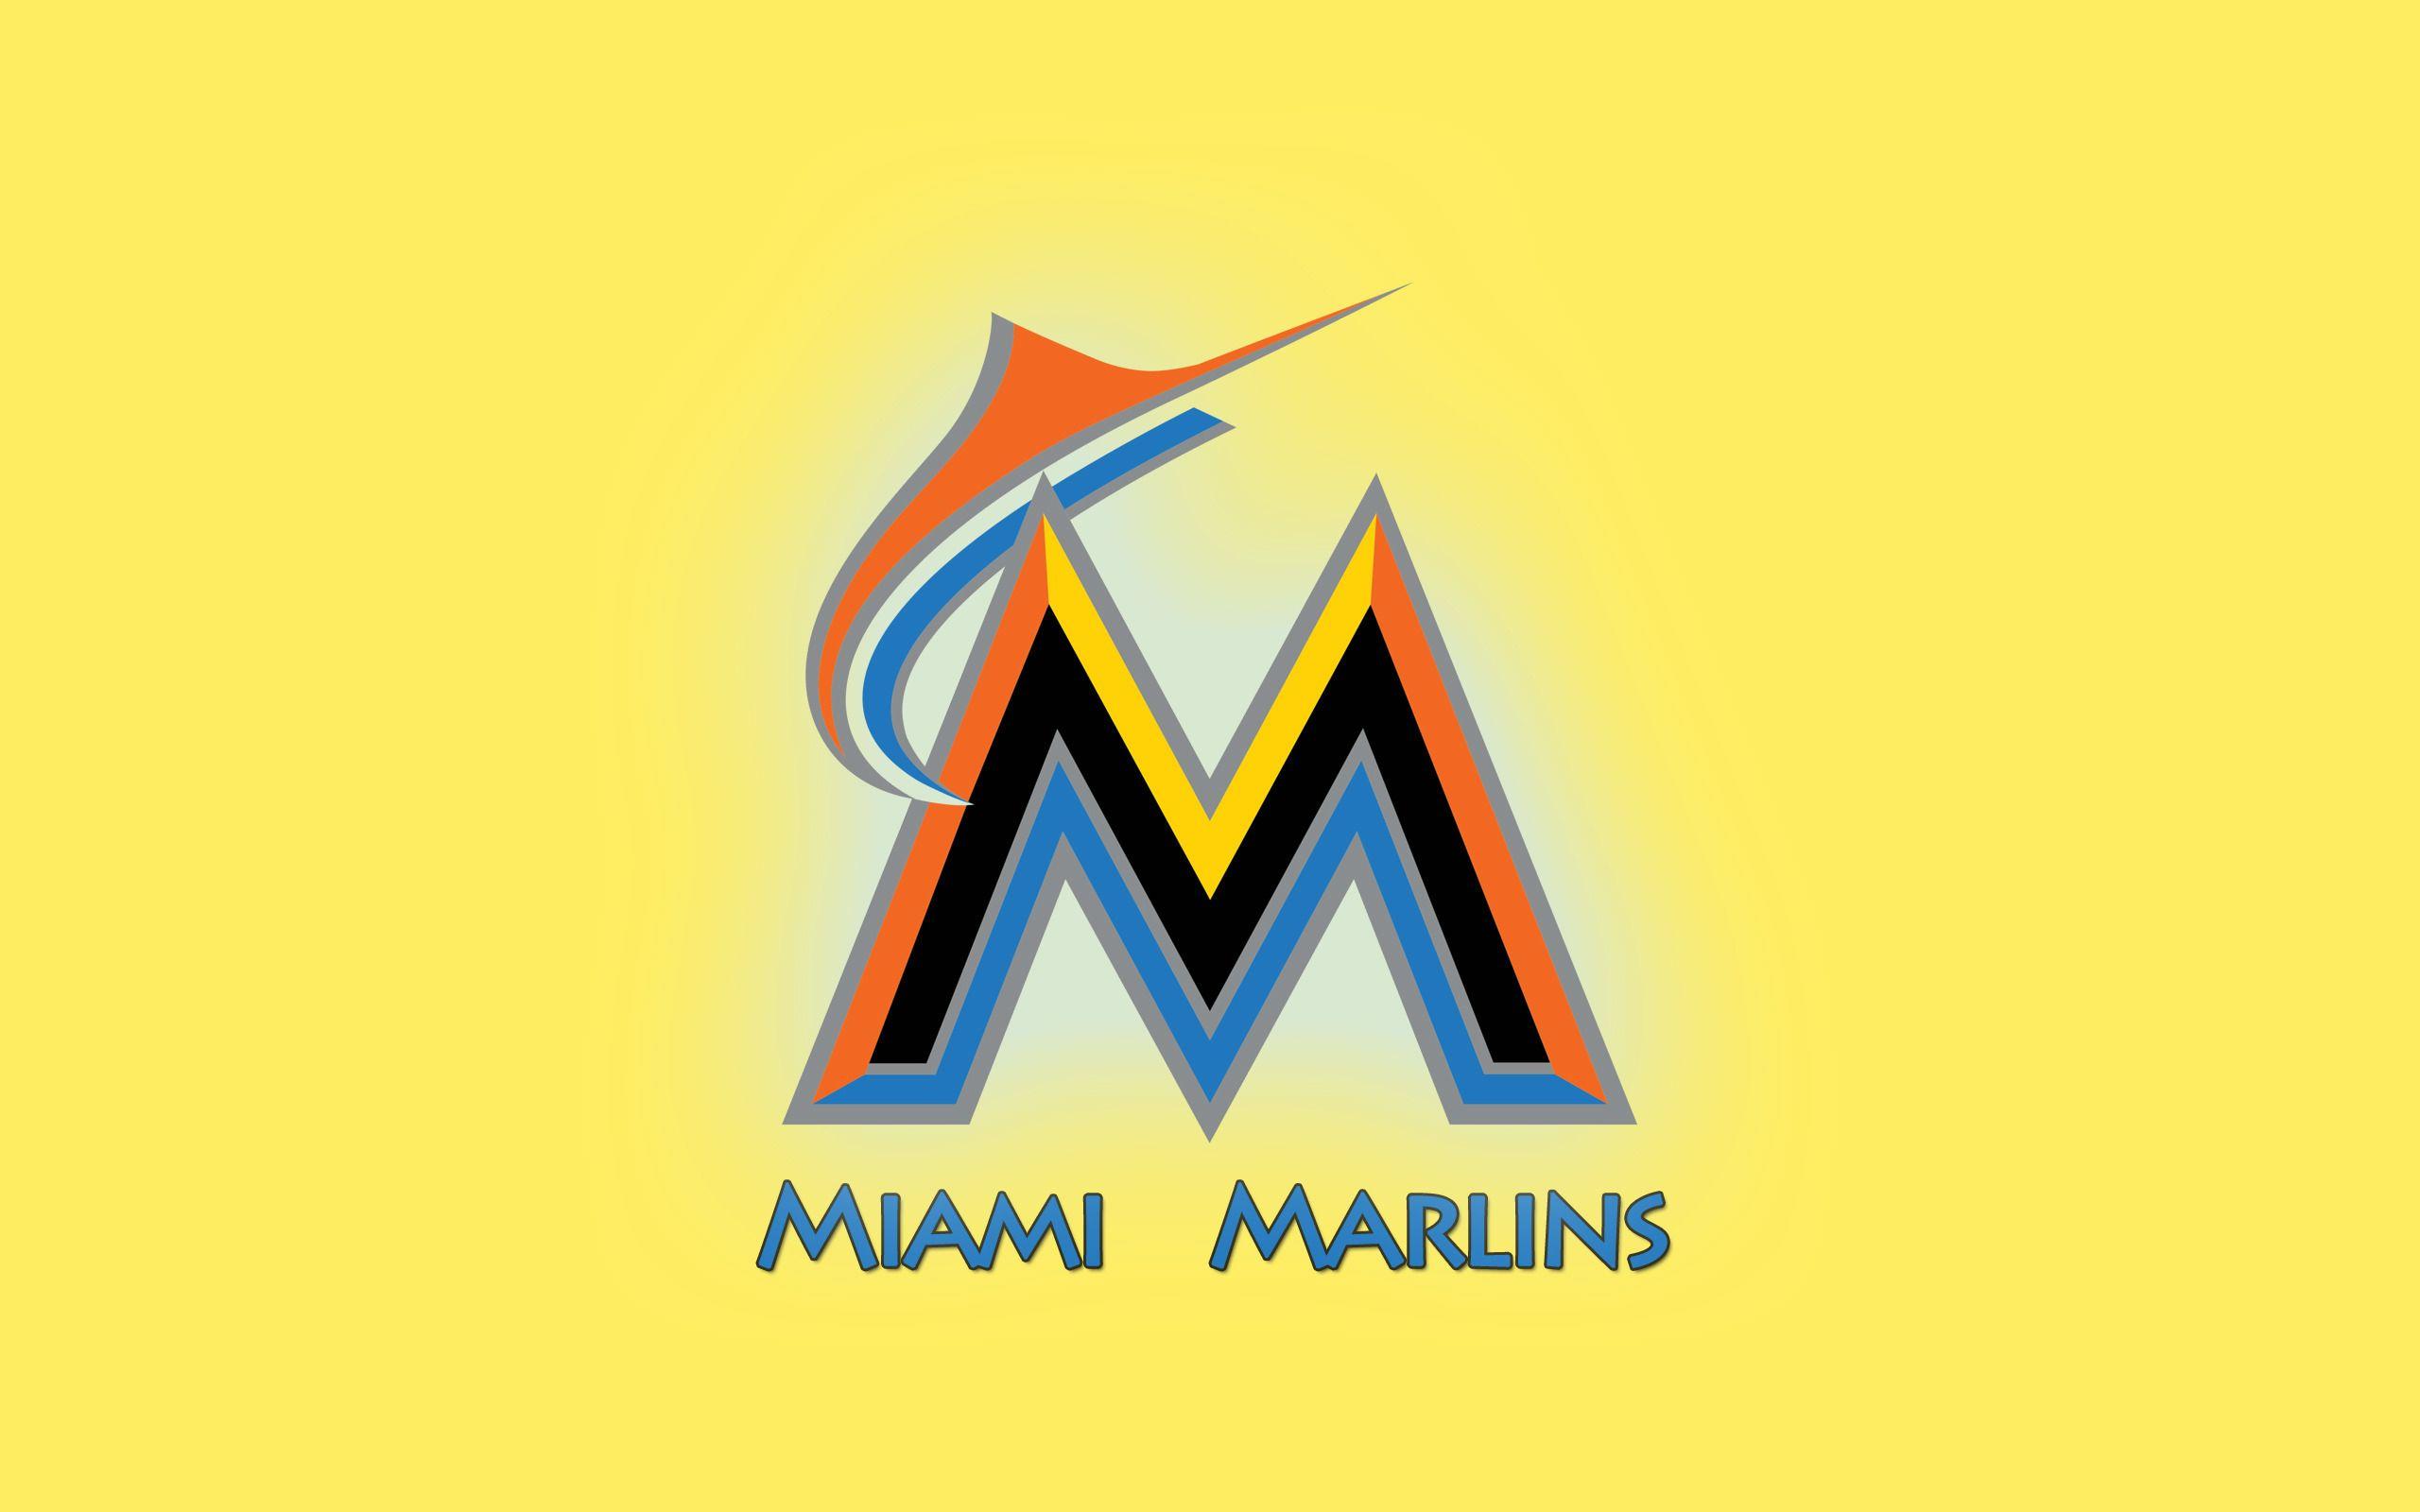 Miami Marlins Logo Desktop Wallpaper 50482 2560x1600 px